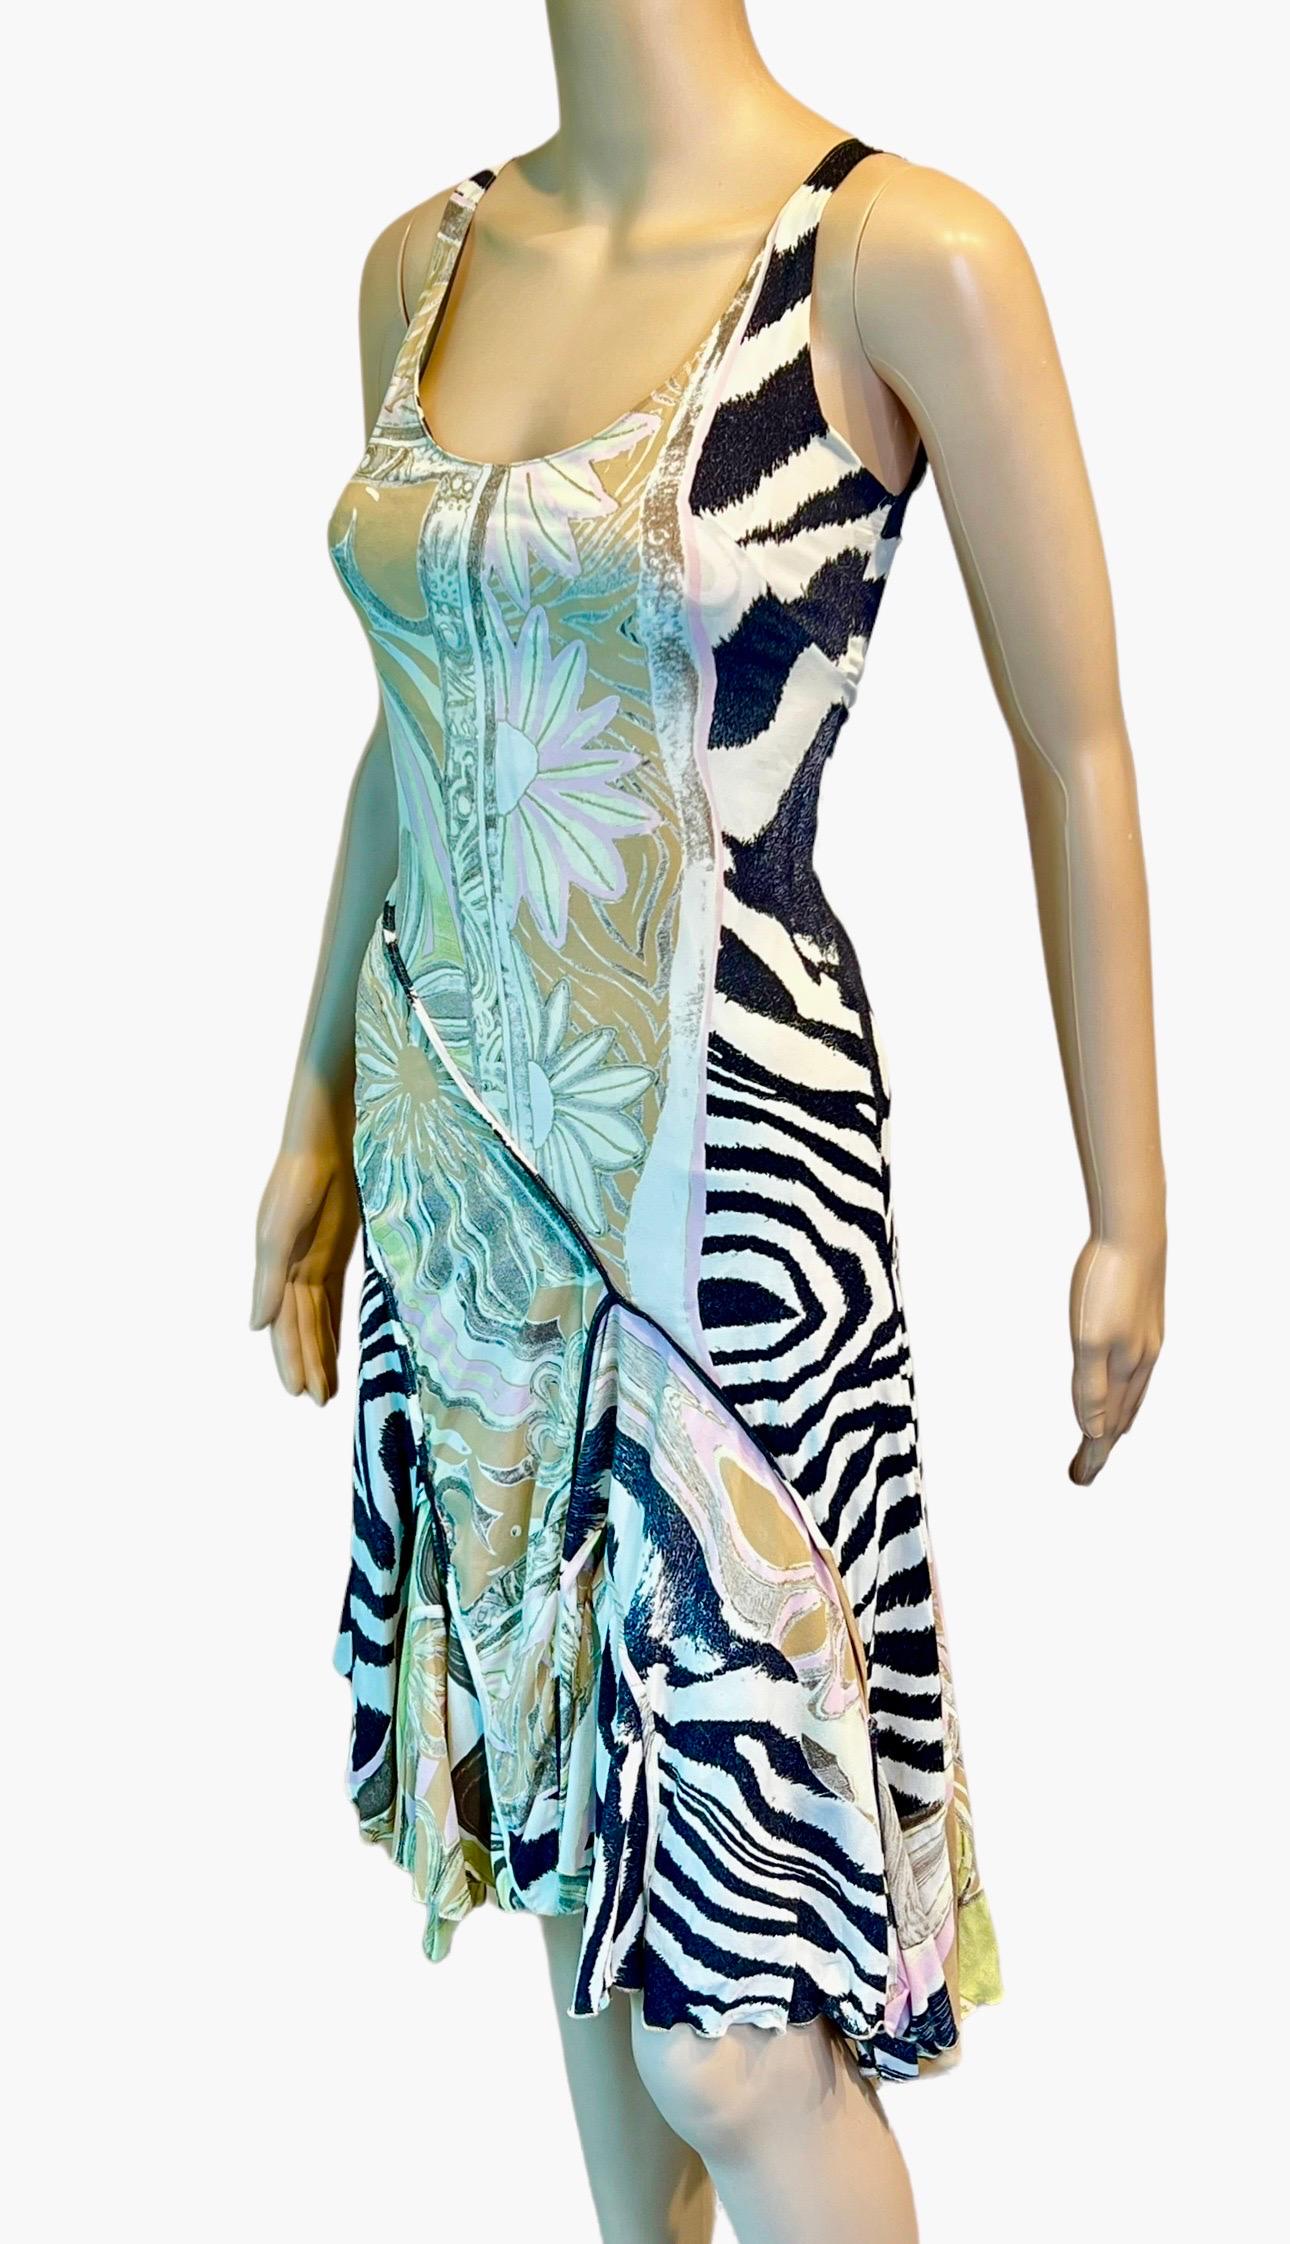 Roberto Cavalli S/S 2004 Floral Abstract Print Asymmetric Dress Size XS